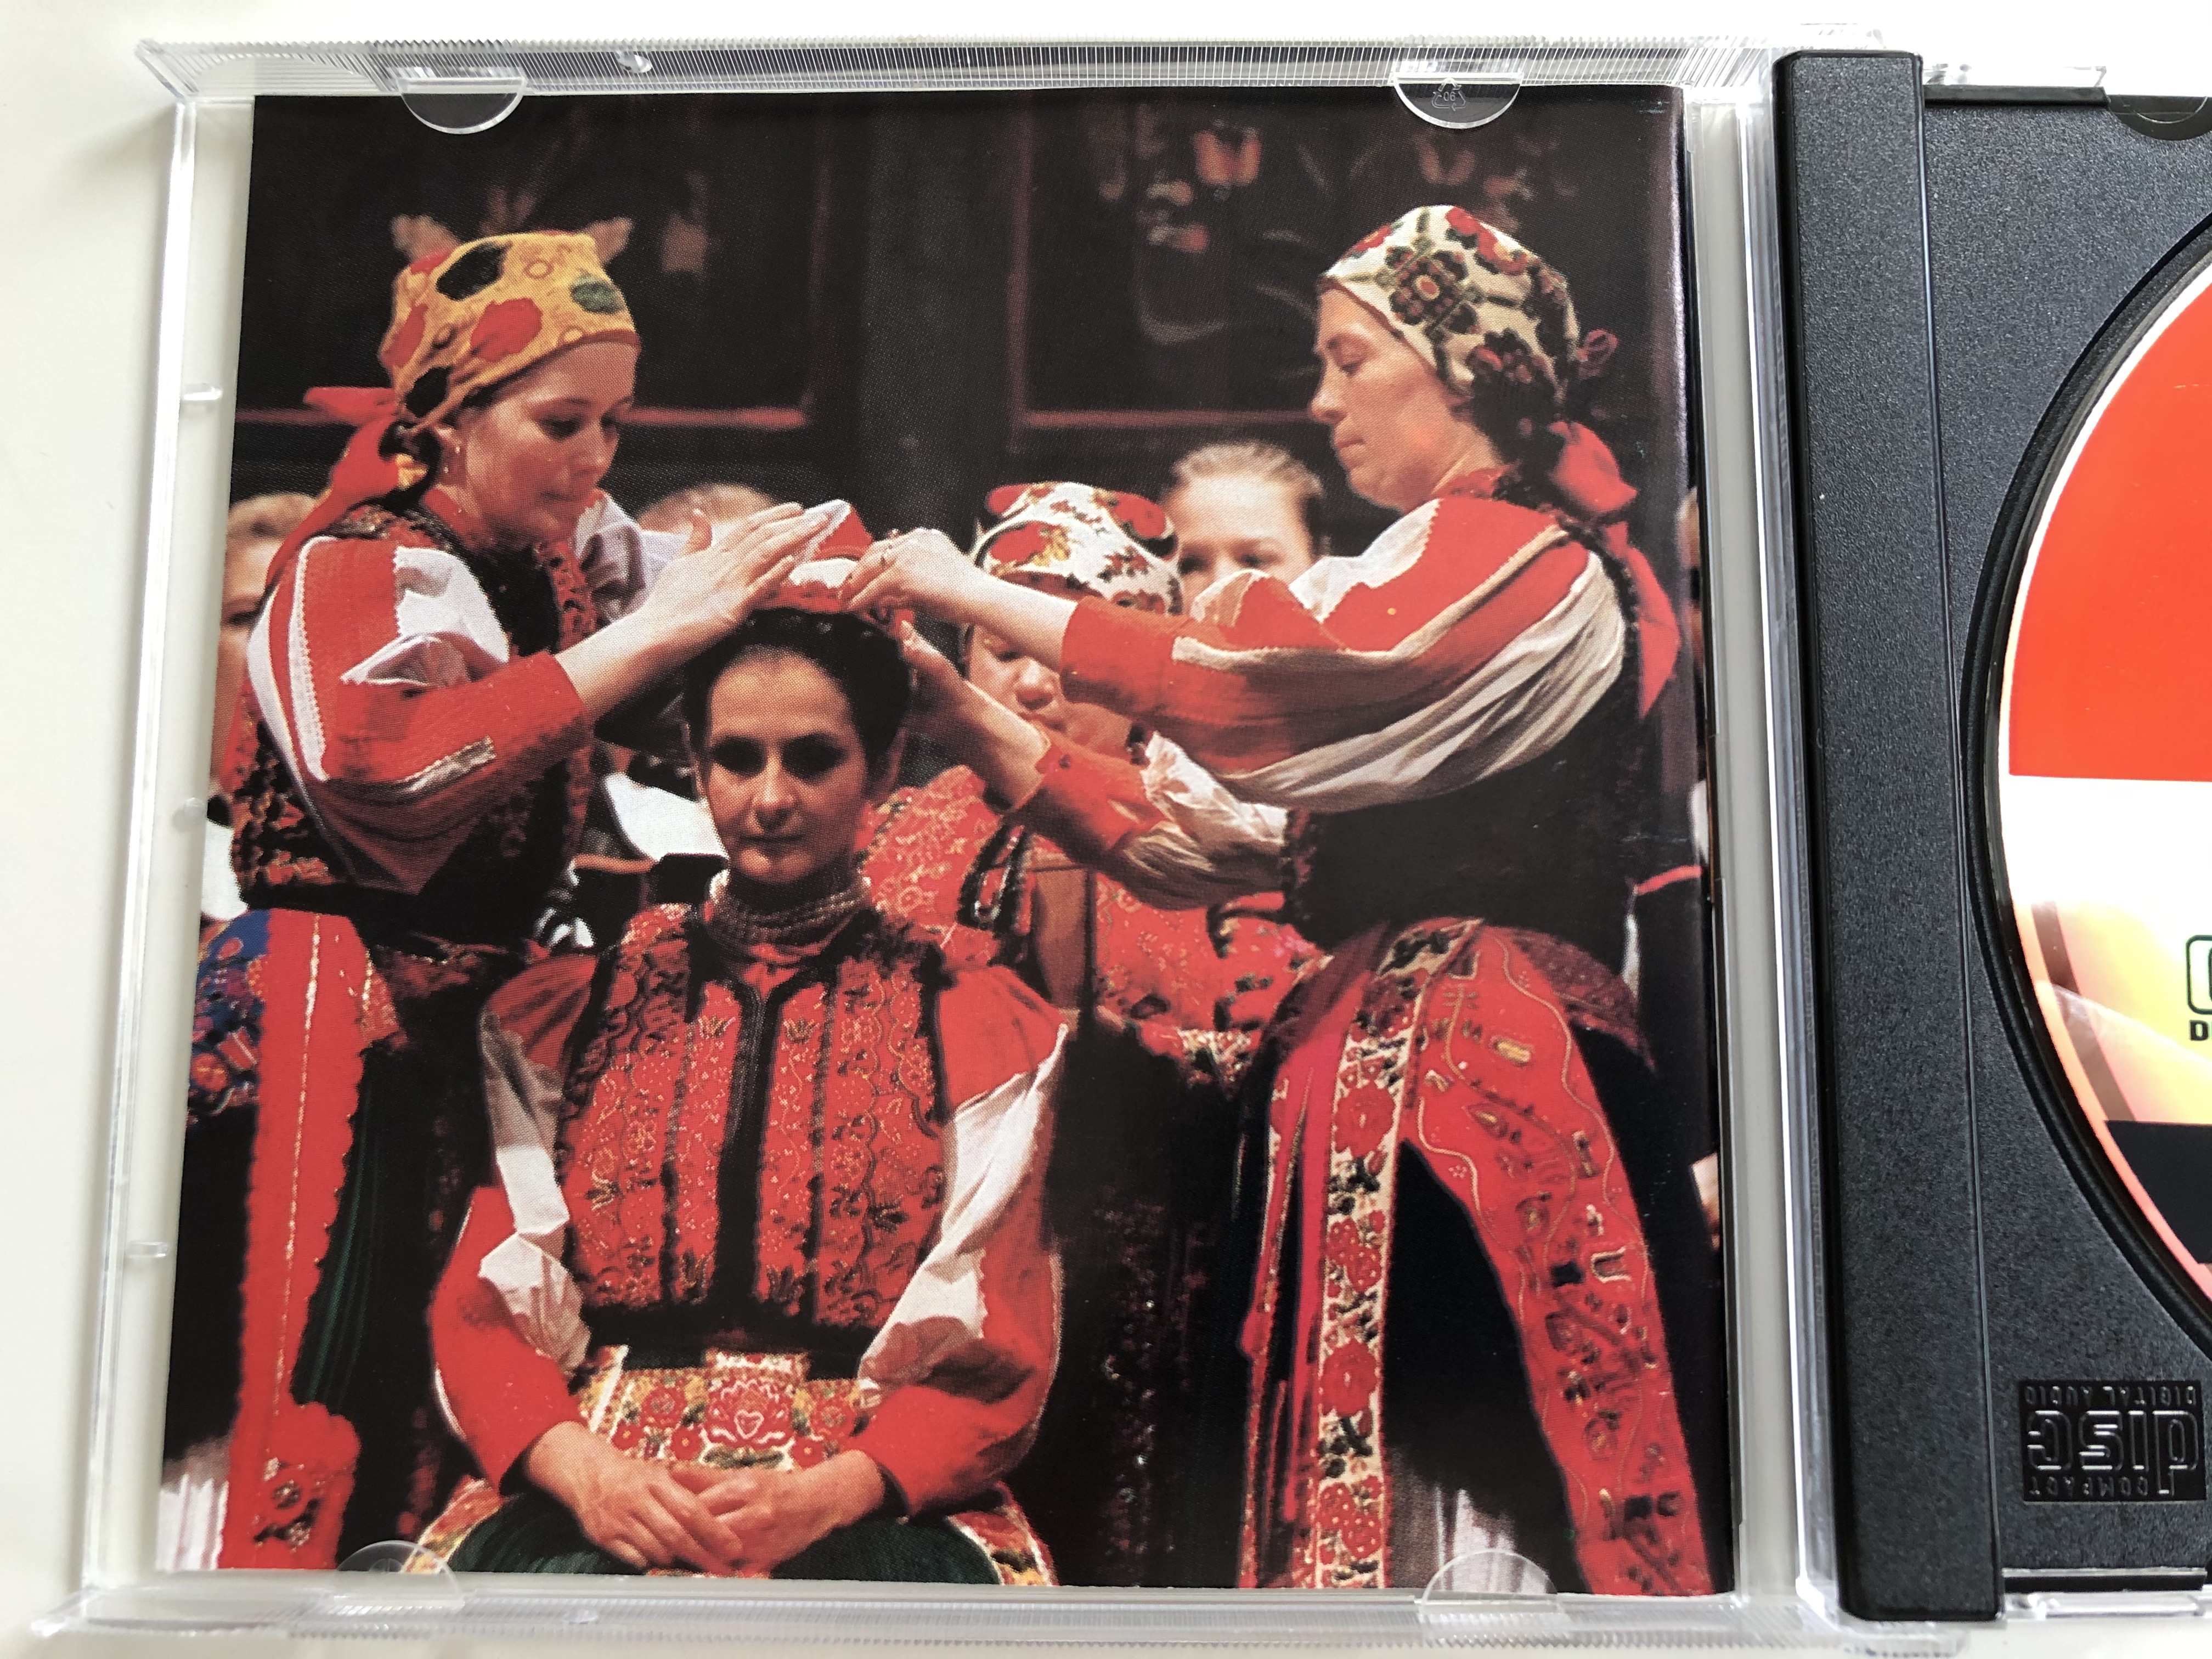 hungarian-wedding-magyar-menyegz-casamiento-h-ngaro-yellow-records-audio-cd-1992-hy-cd-0001-7-.jpg